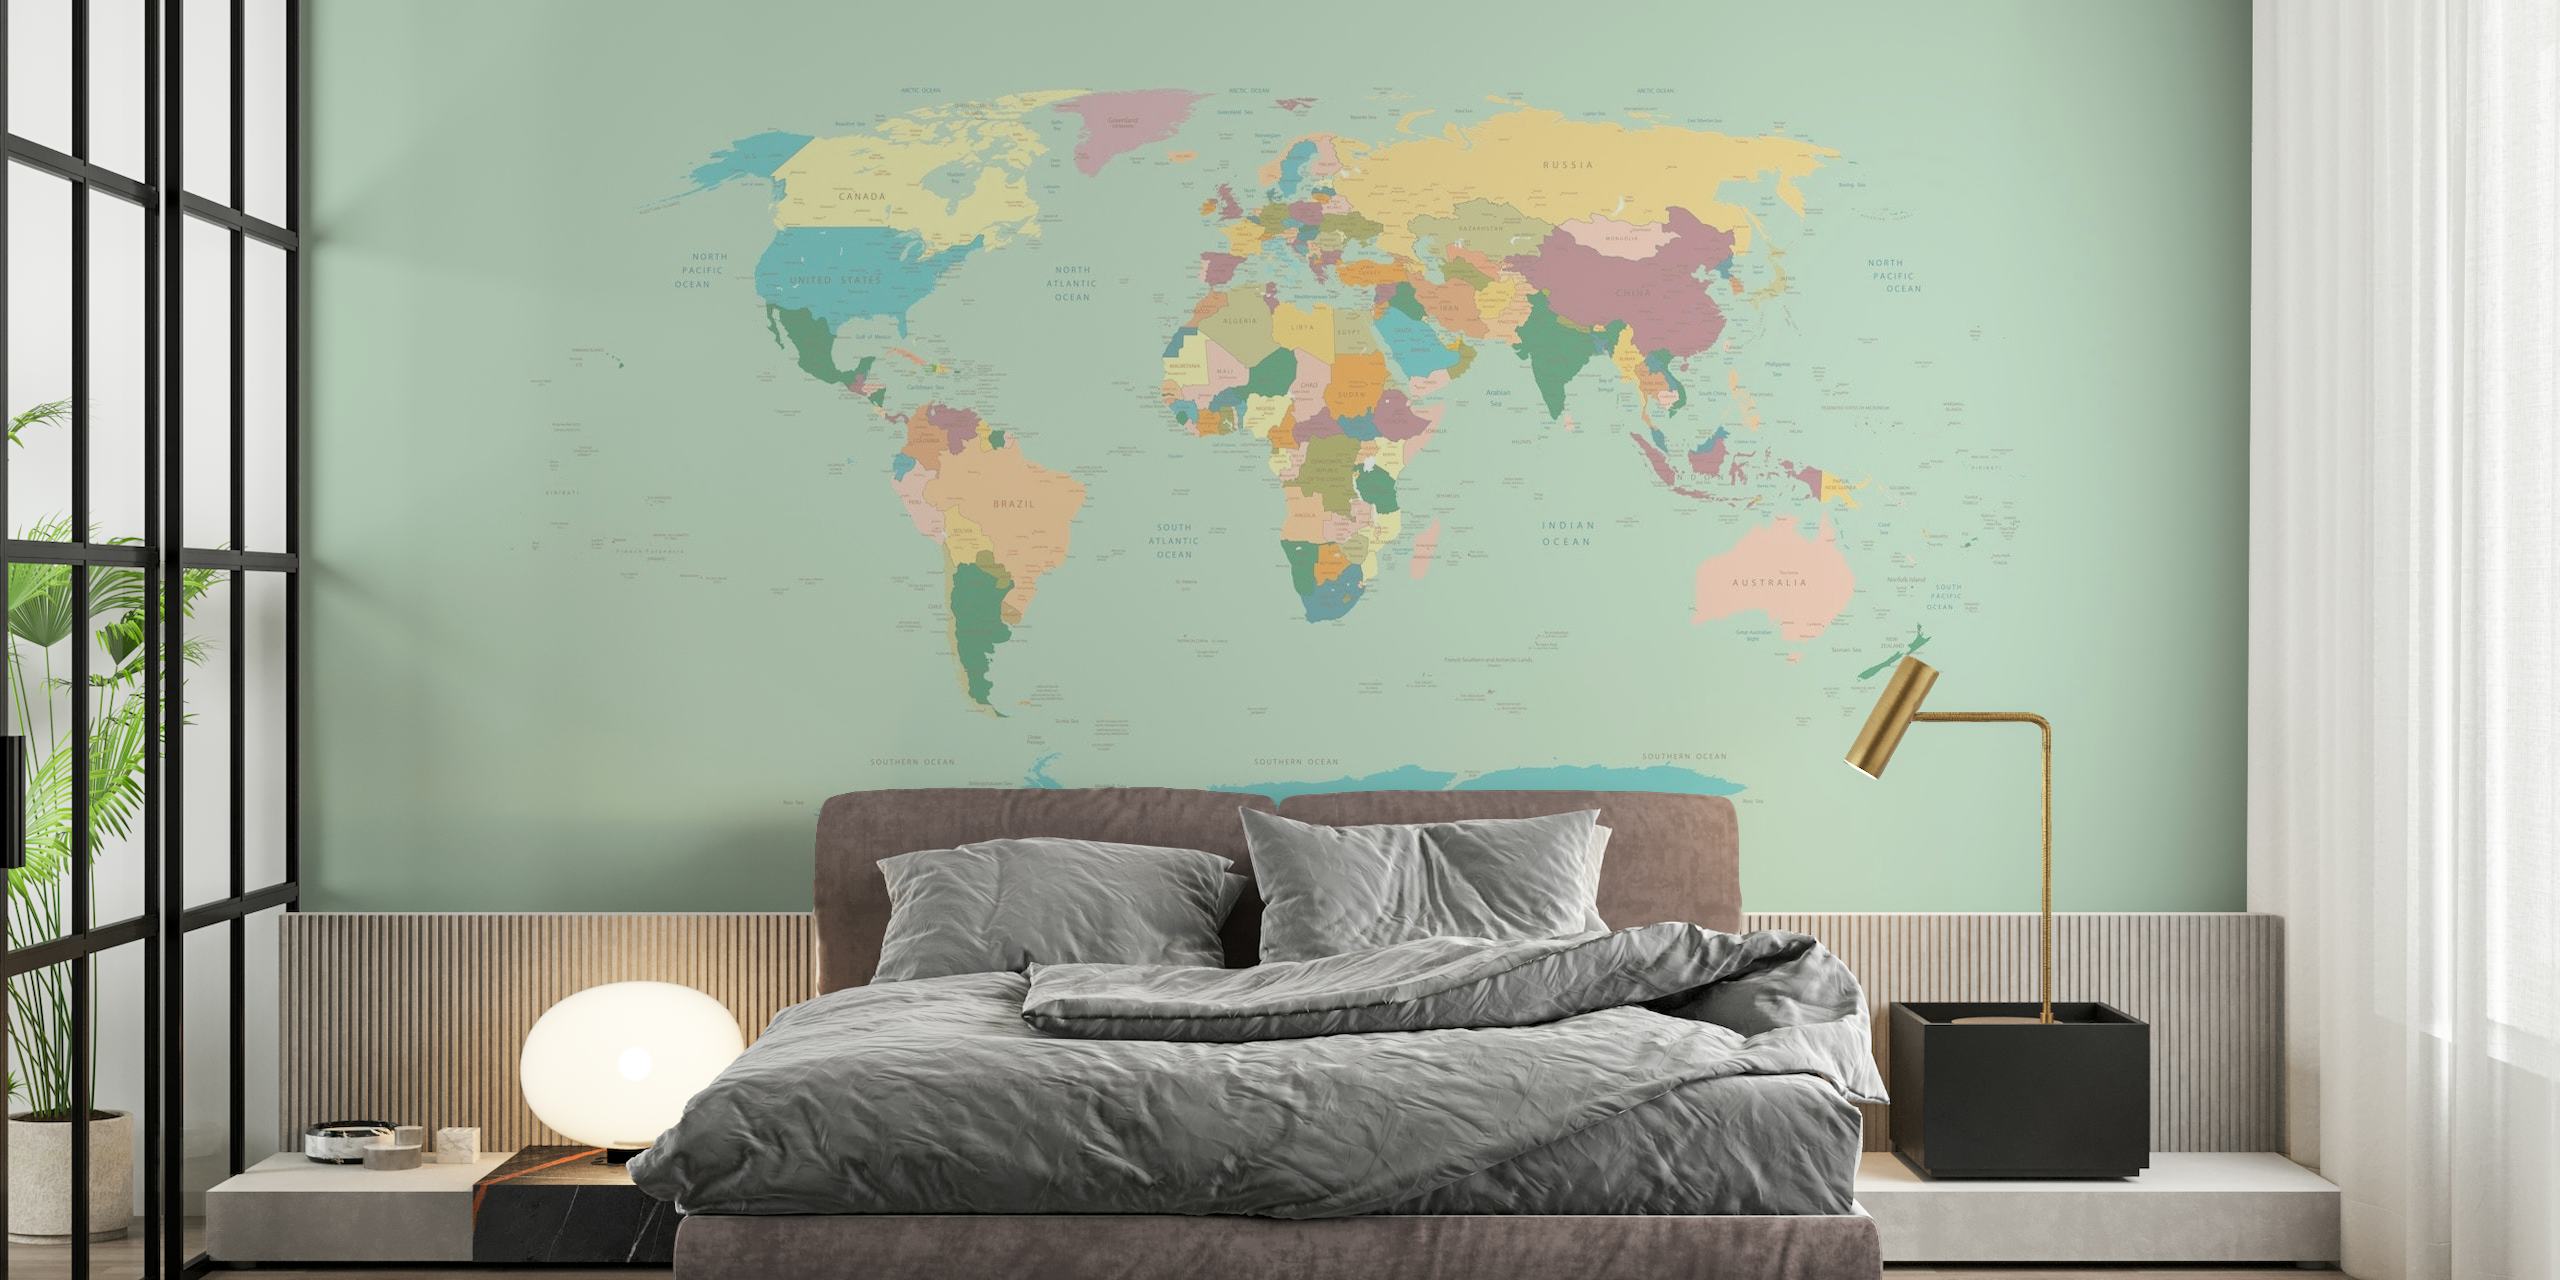 World map 2 papel pintado